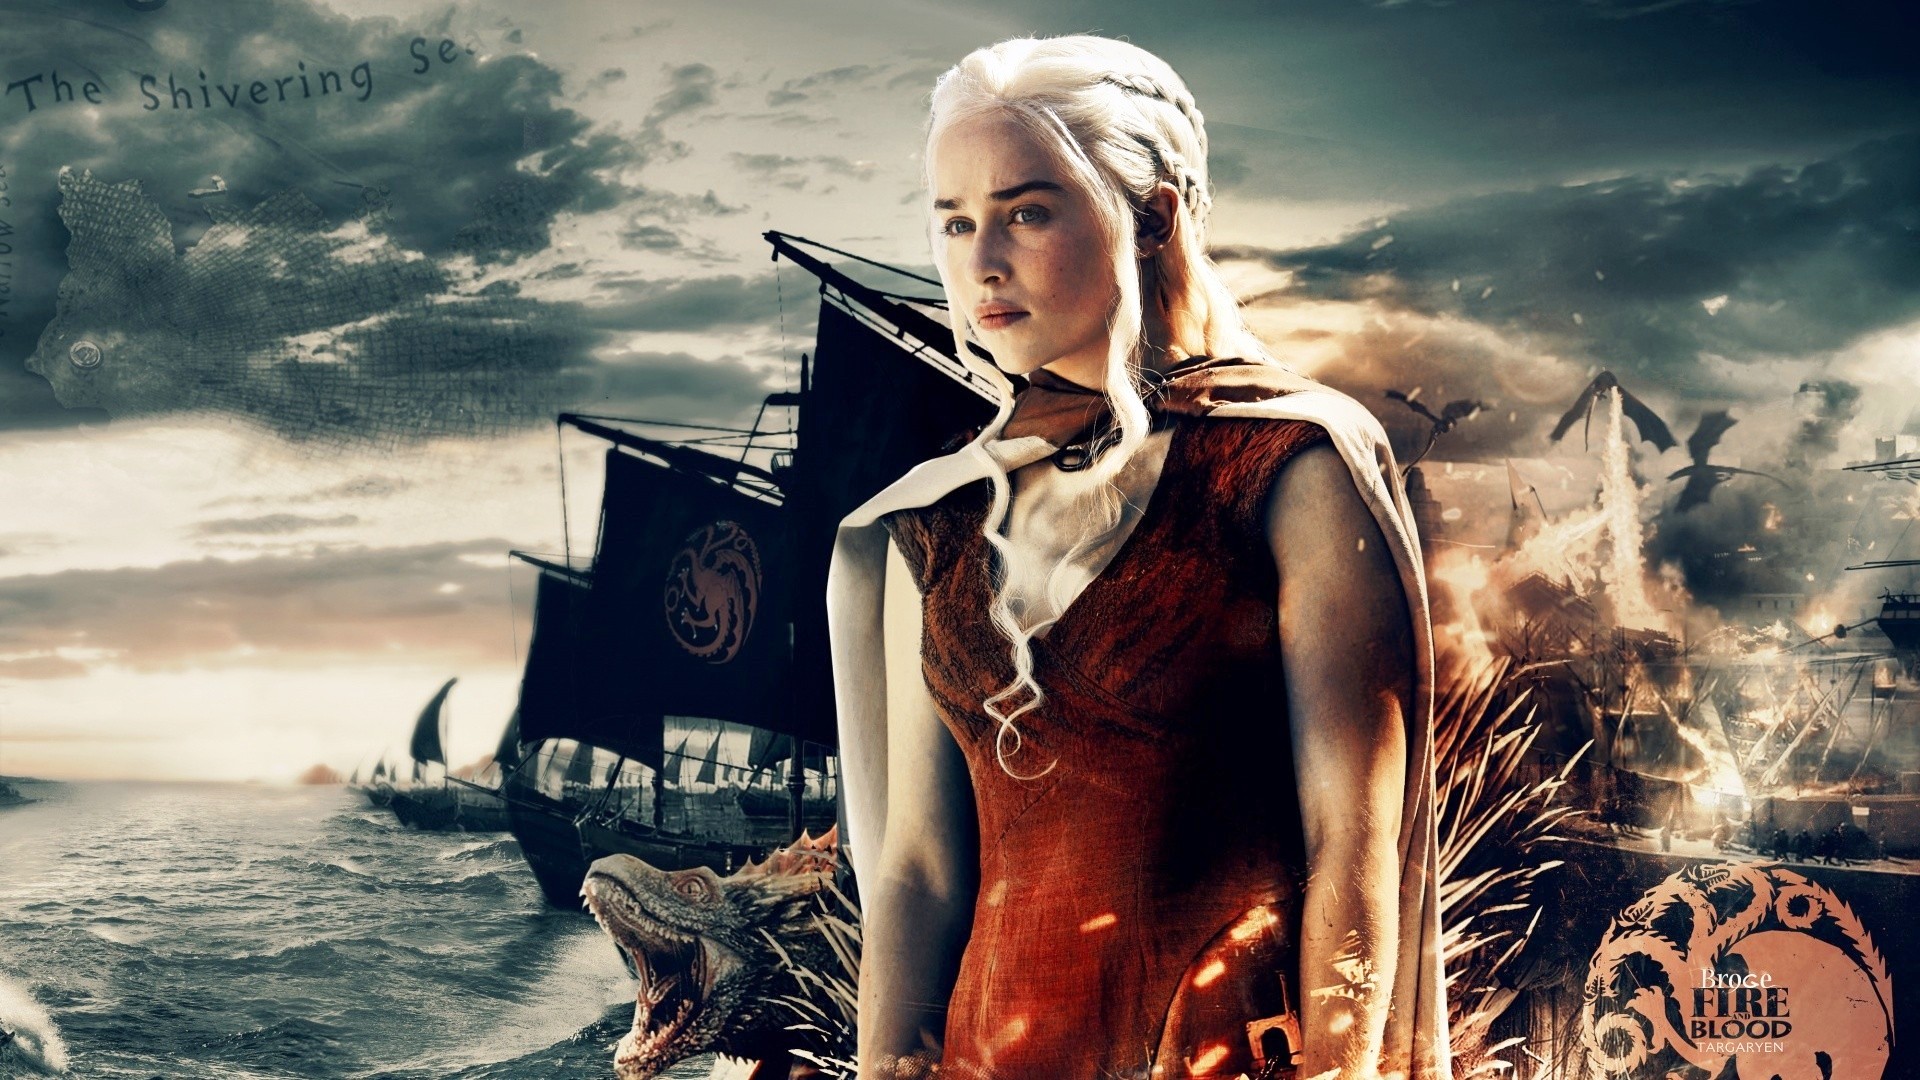 Game of Thrones Daenerys Targaryen Wallpaper HD 2019 Movie